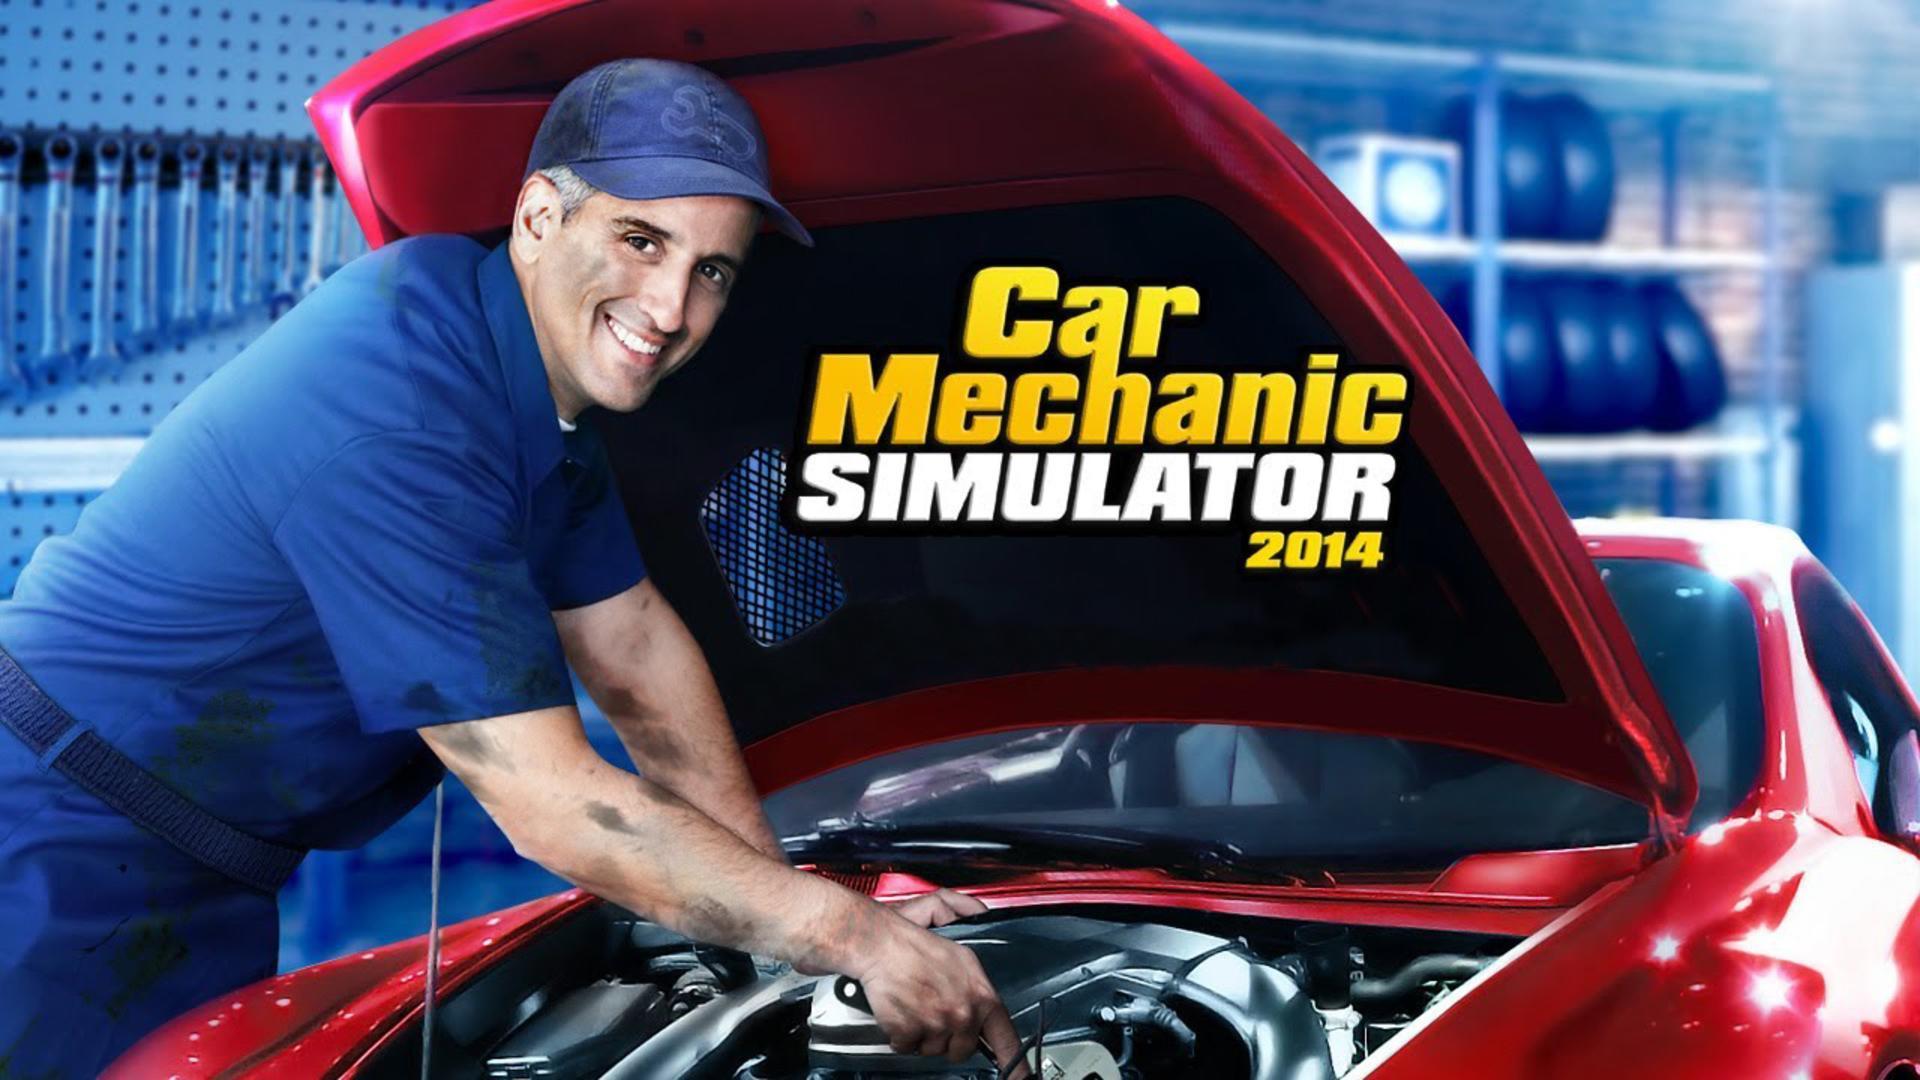 Car mechanic racing. Симулятор механика 2014. Car Mechanic 2014. Симулятор автомеханика. Кар механик симулятор 2014.